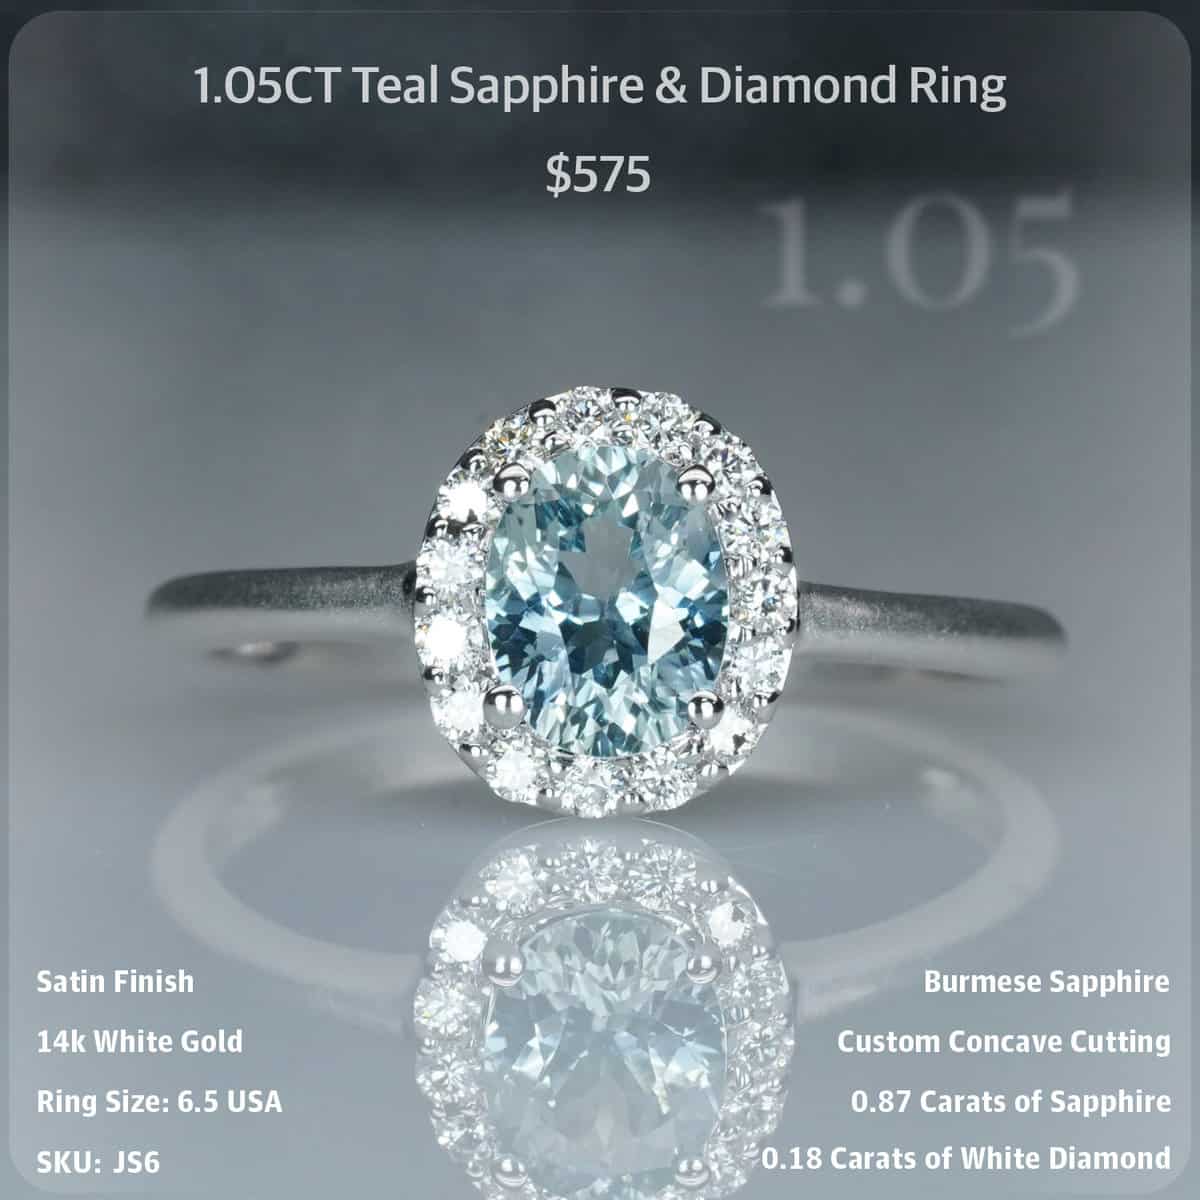 1.05CT Teal Sapphire & Diamond Ring